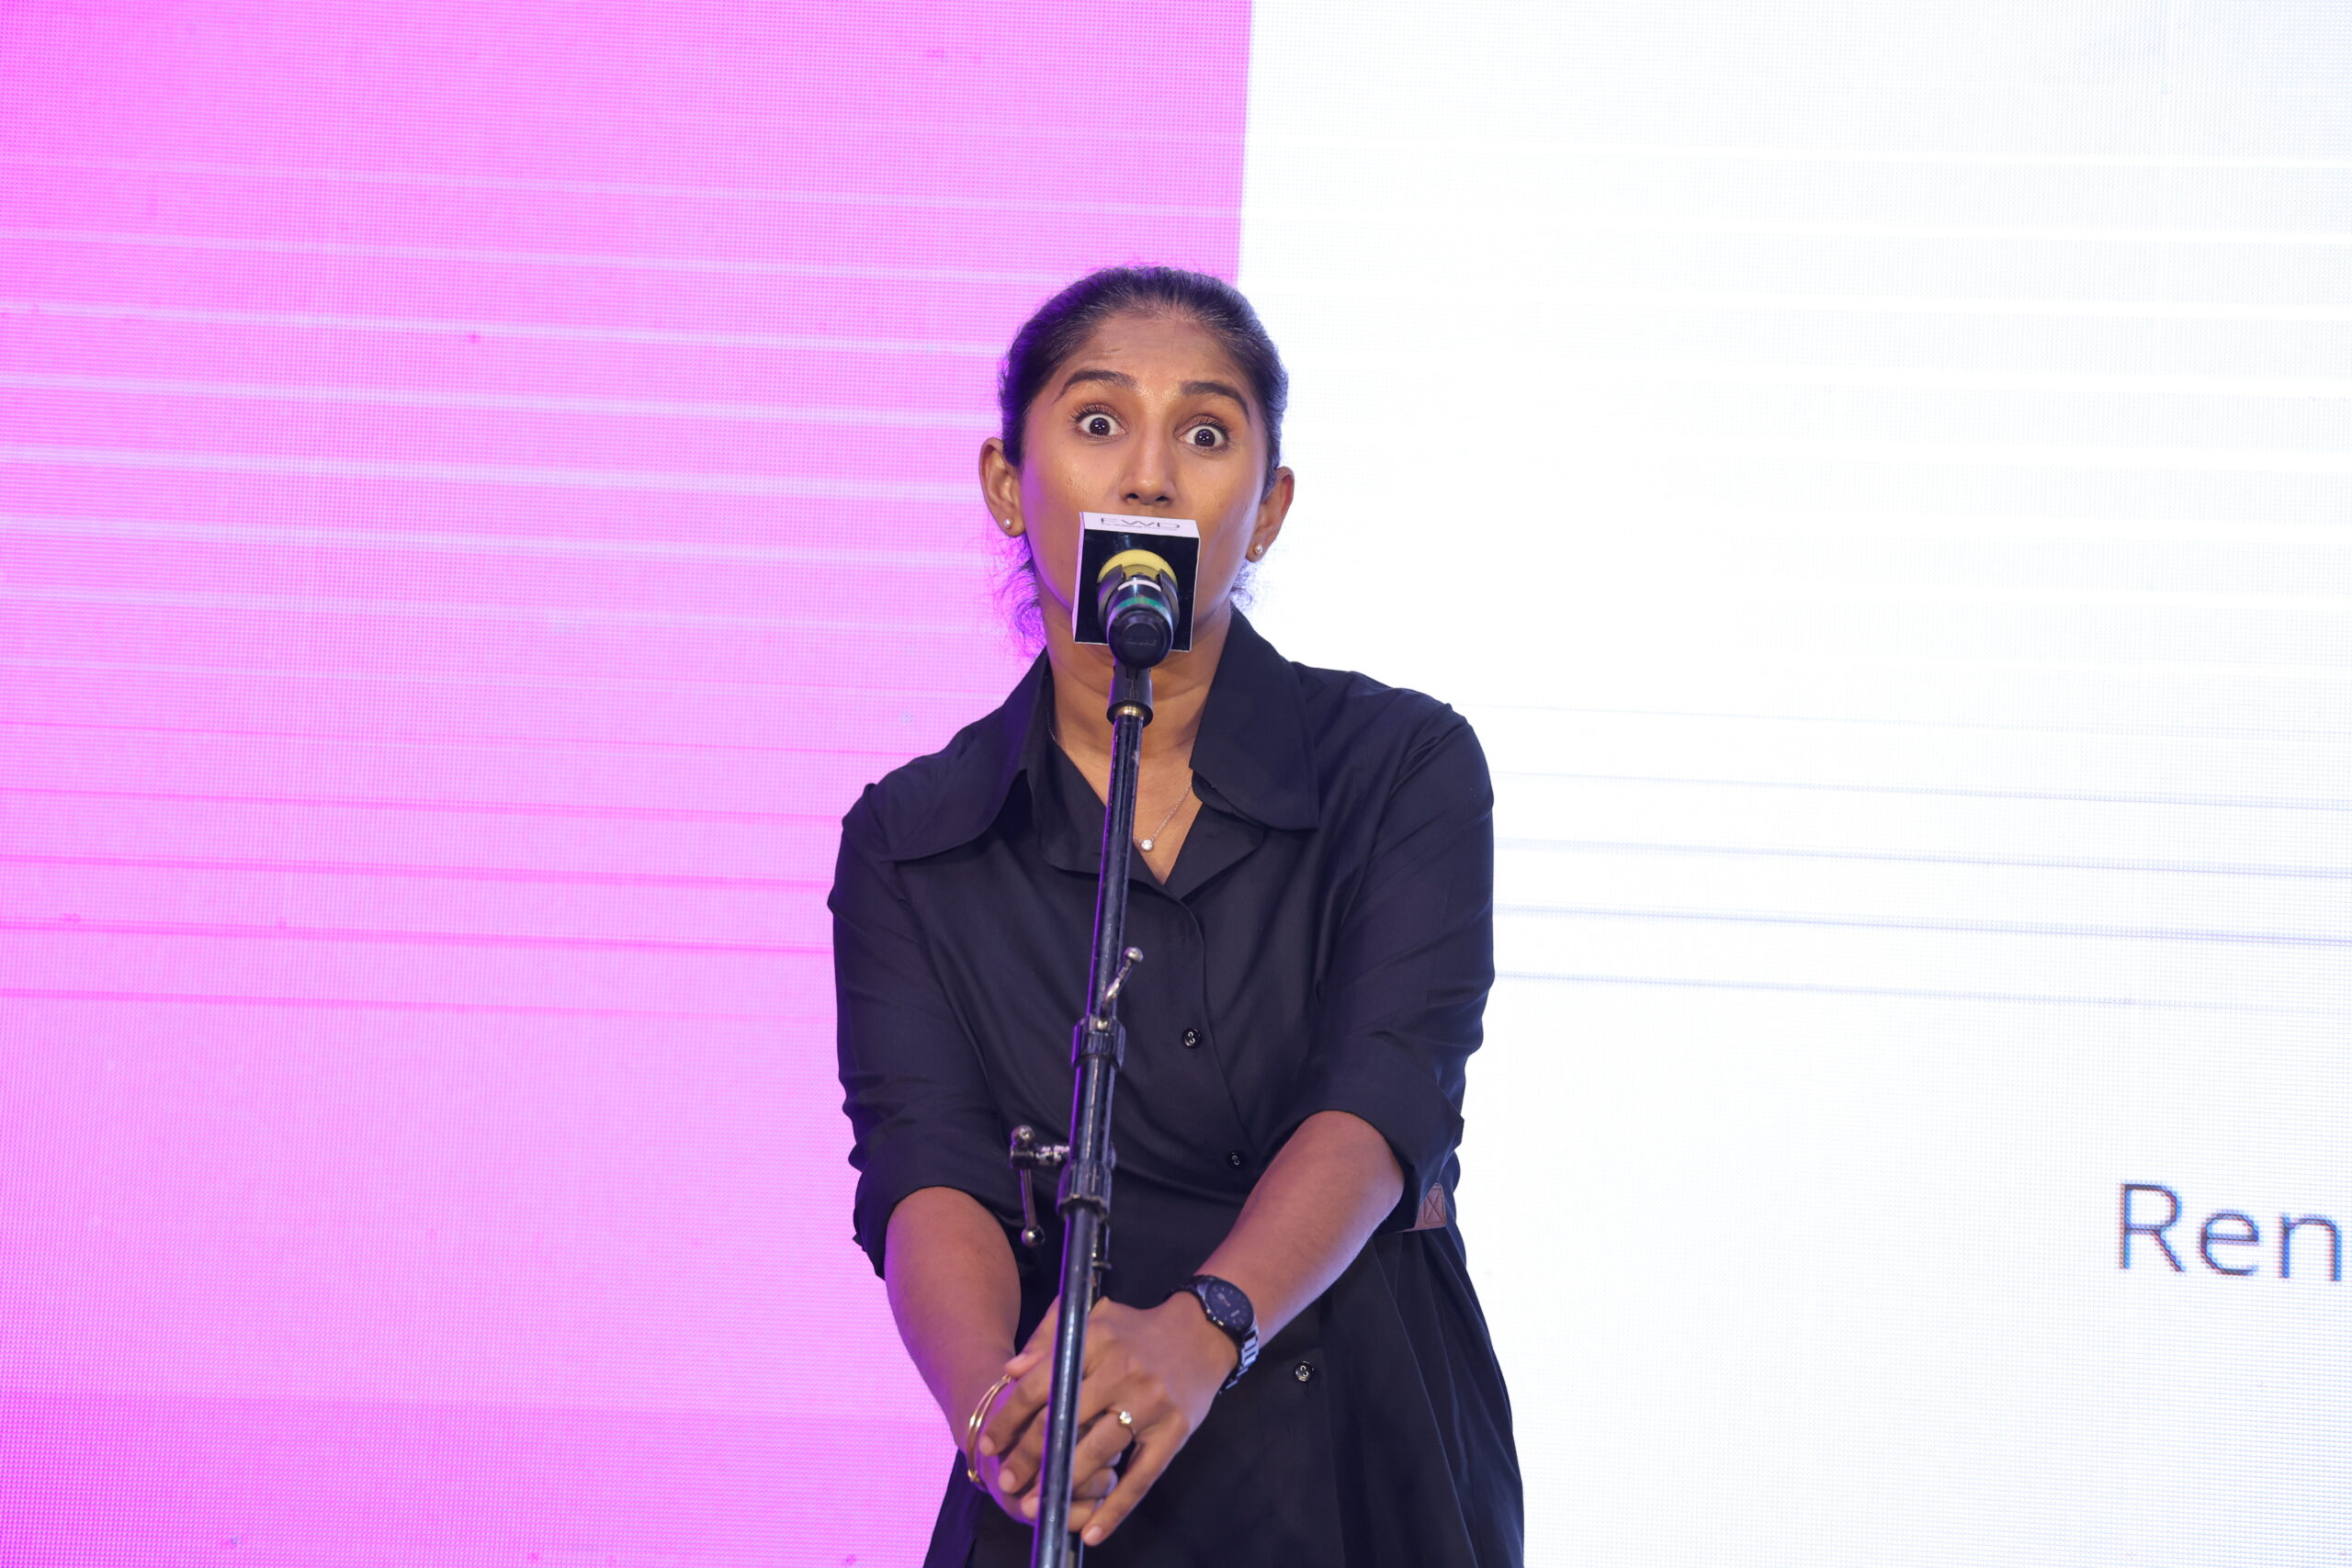 Aiyyo Shraddha performing at a corporate event in Mumbai